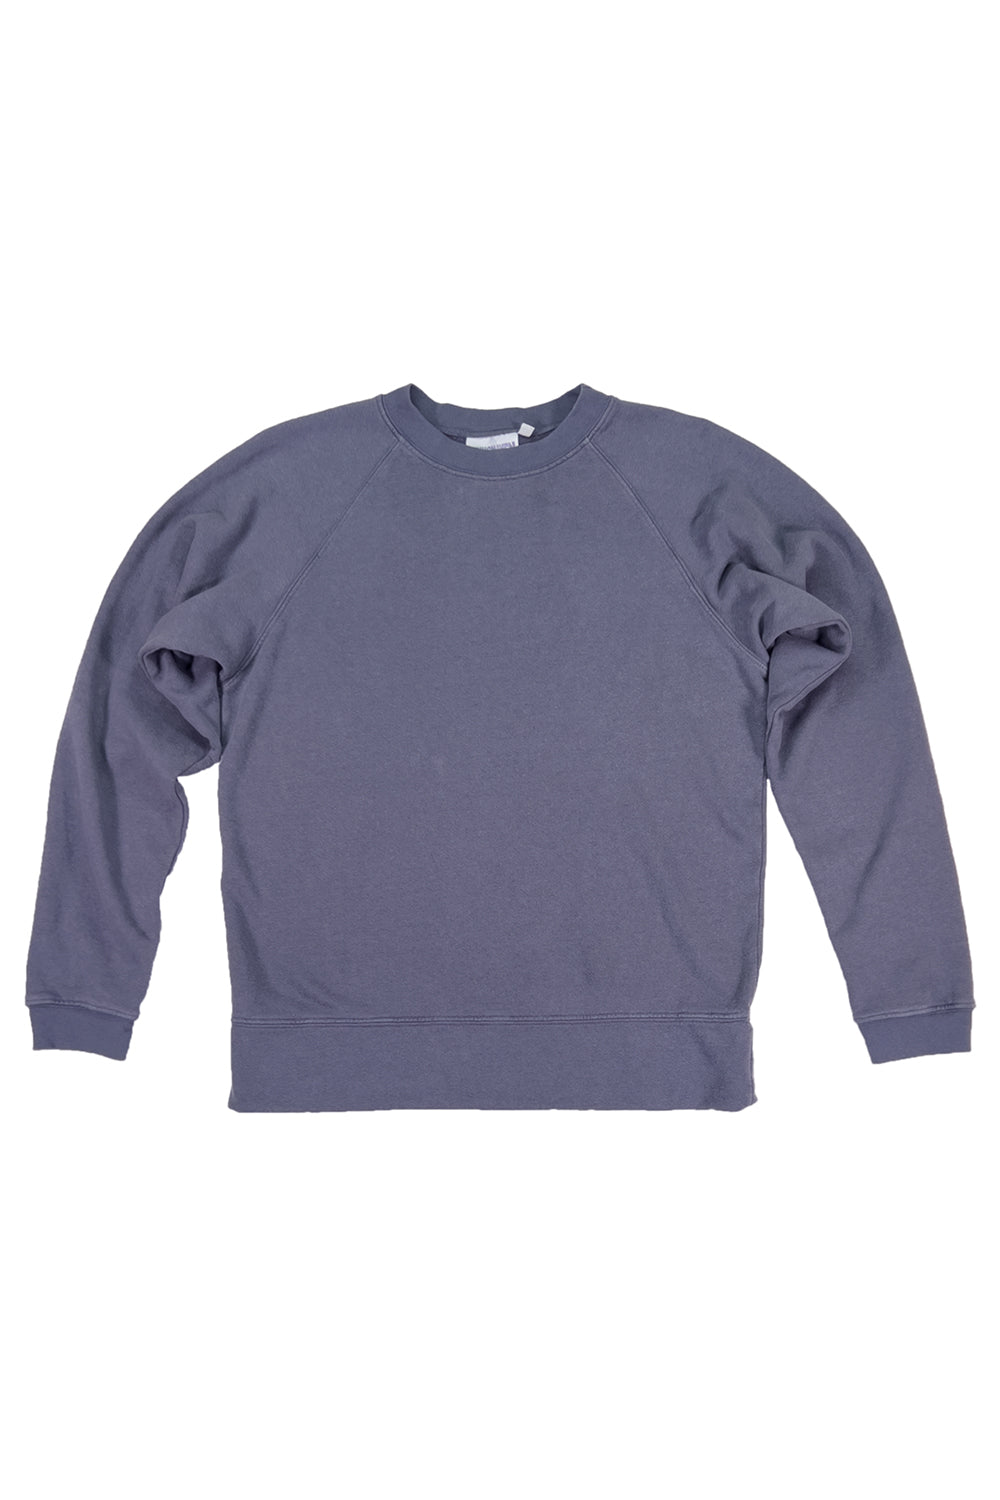 New Design Heavyweight Two Tone Color Raglan Sweatshirt Oversized Hoodie -  China Two Tone Color Sweatshirt and Men Cotton Fleece Hoodies price